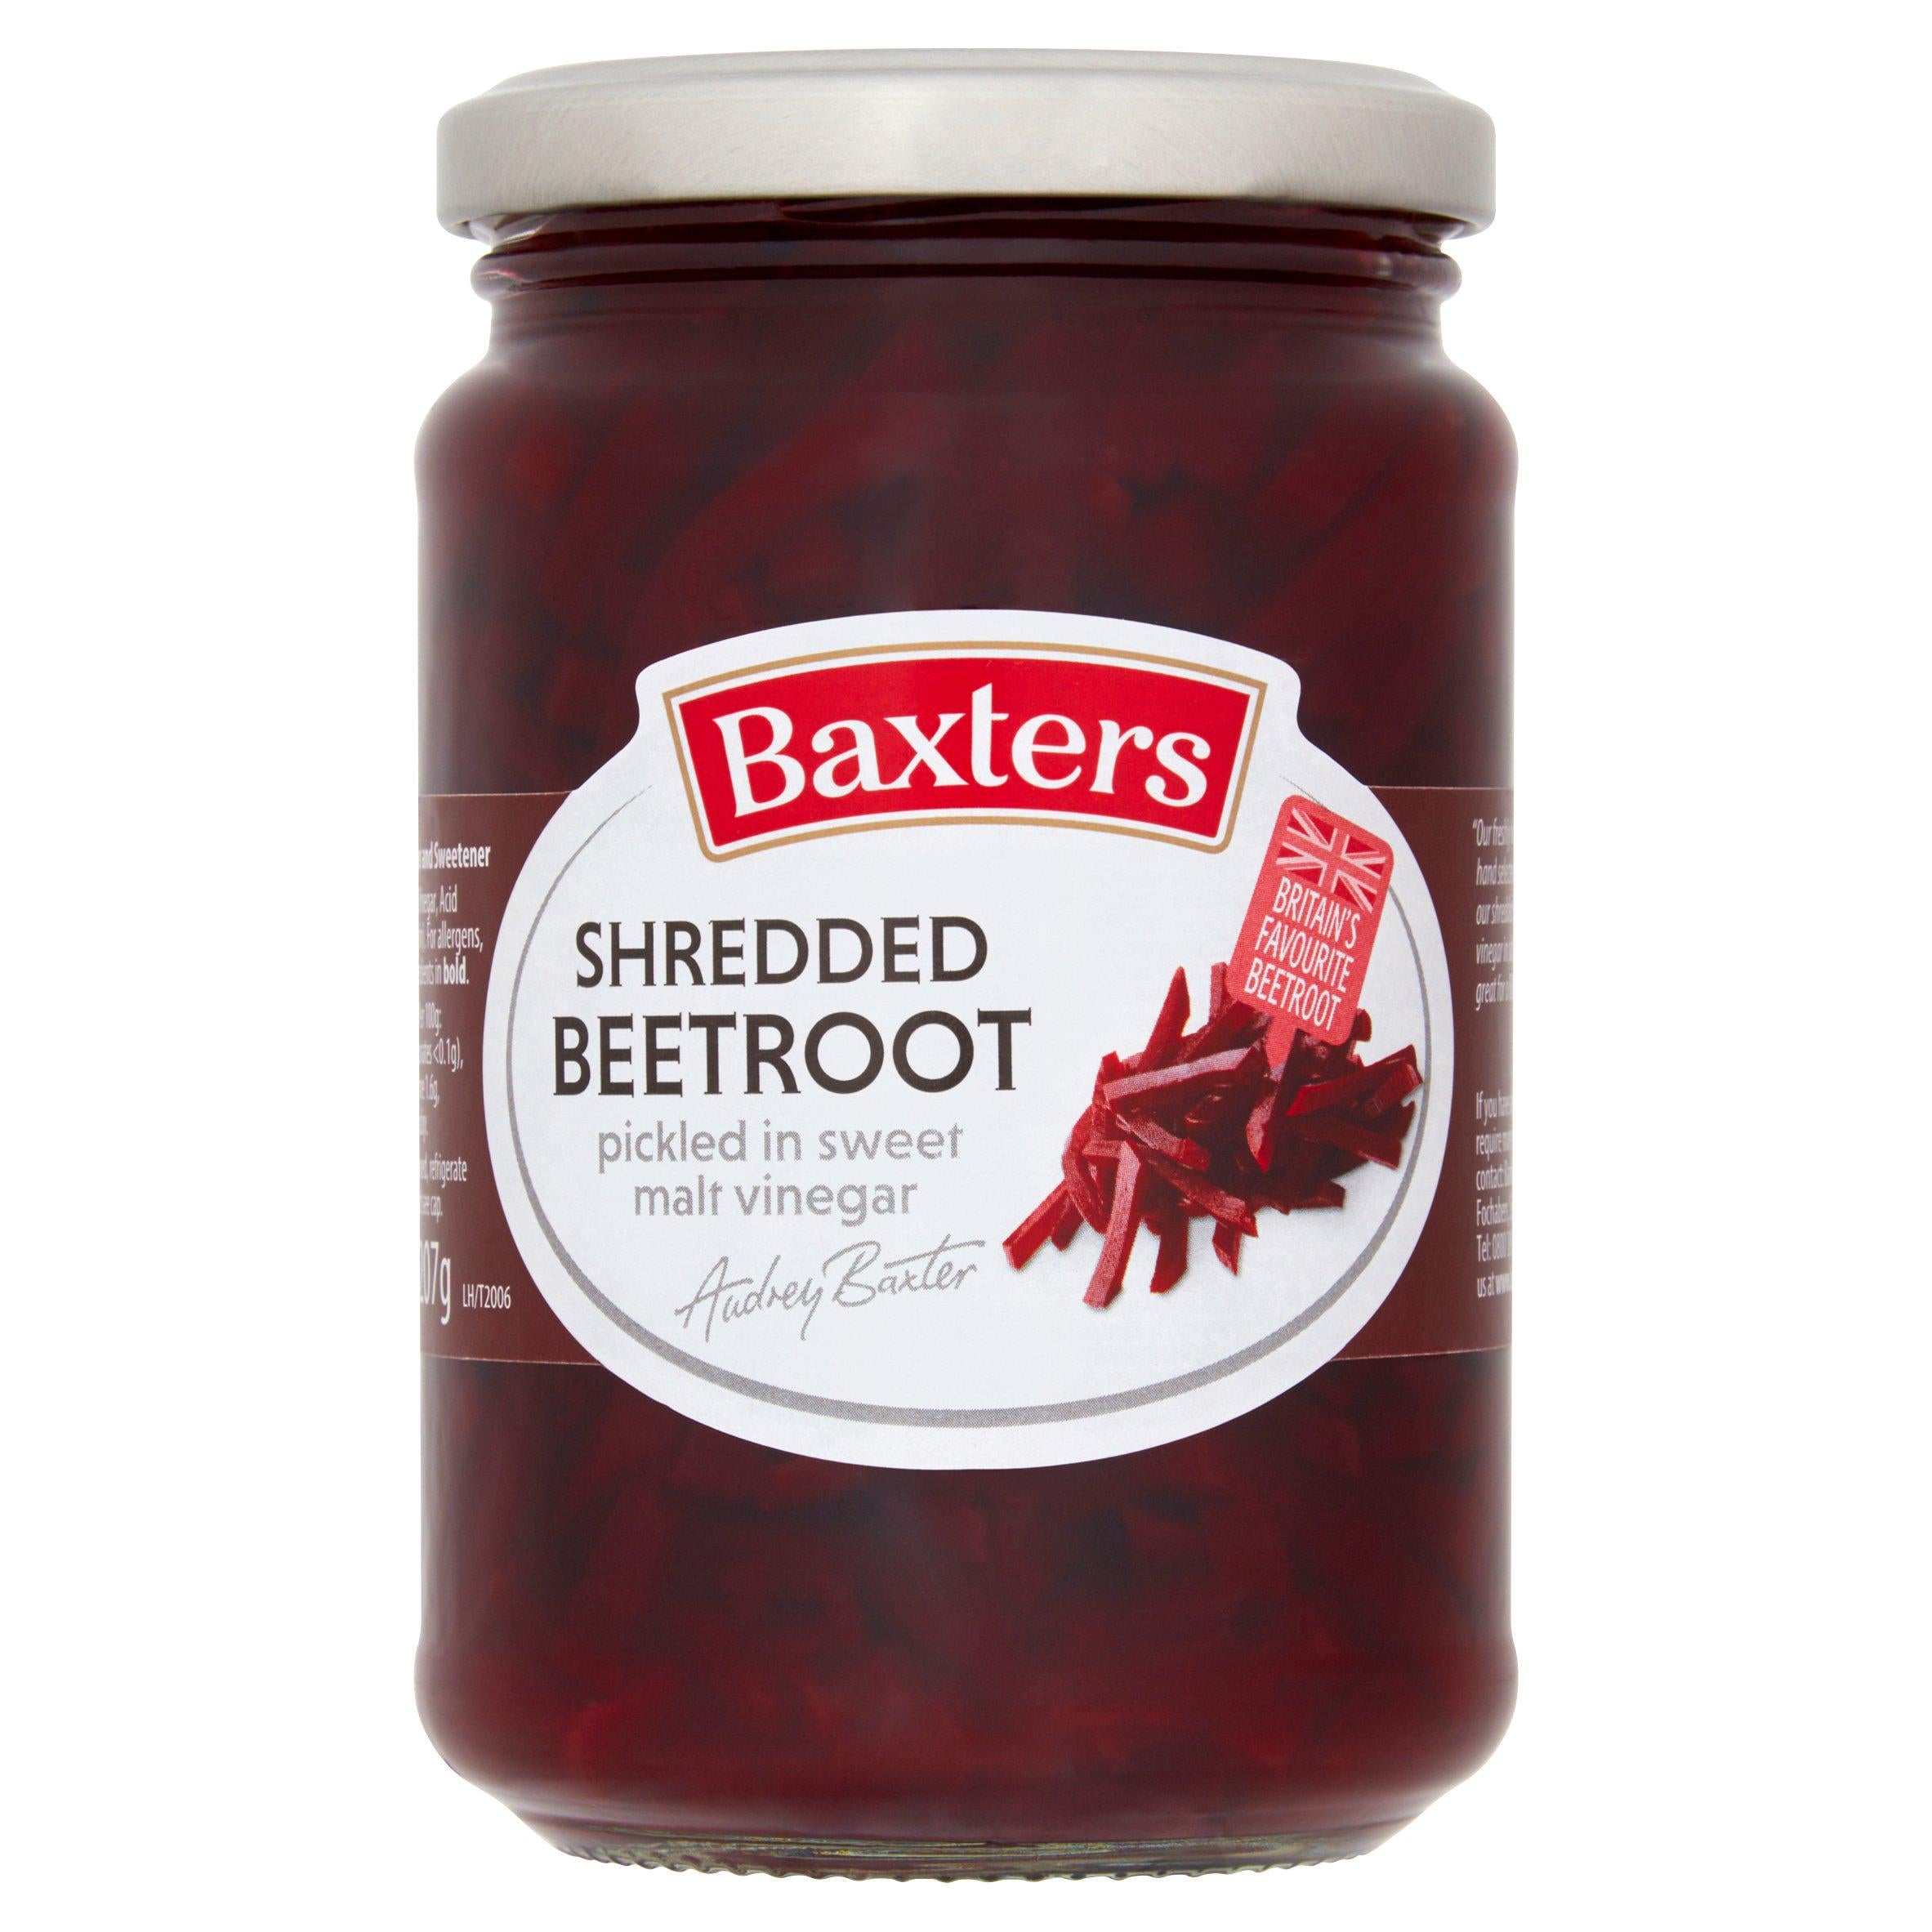 Baxters Shredded Beetroot Pickled in Sweet Malt Vinegar 340g (207g*) GOODS Sainsburys   